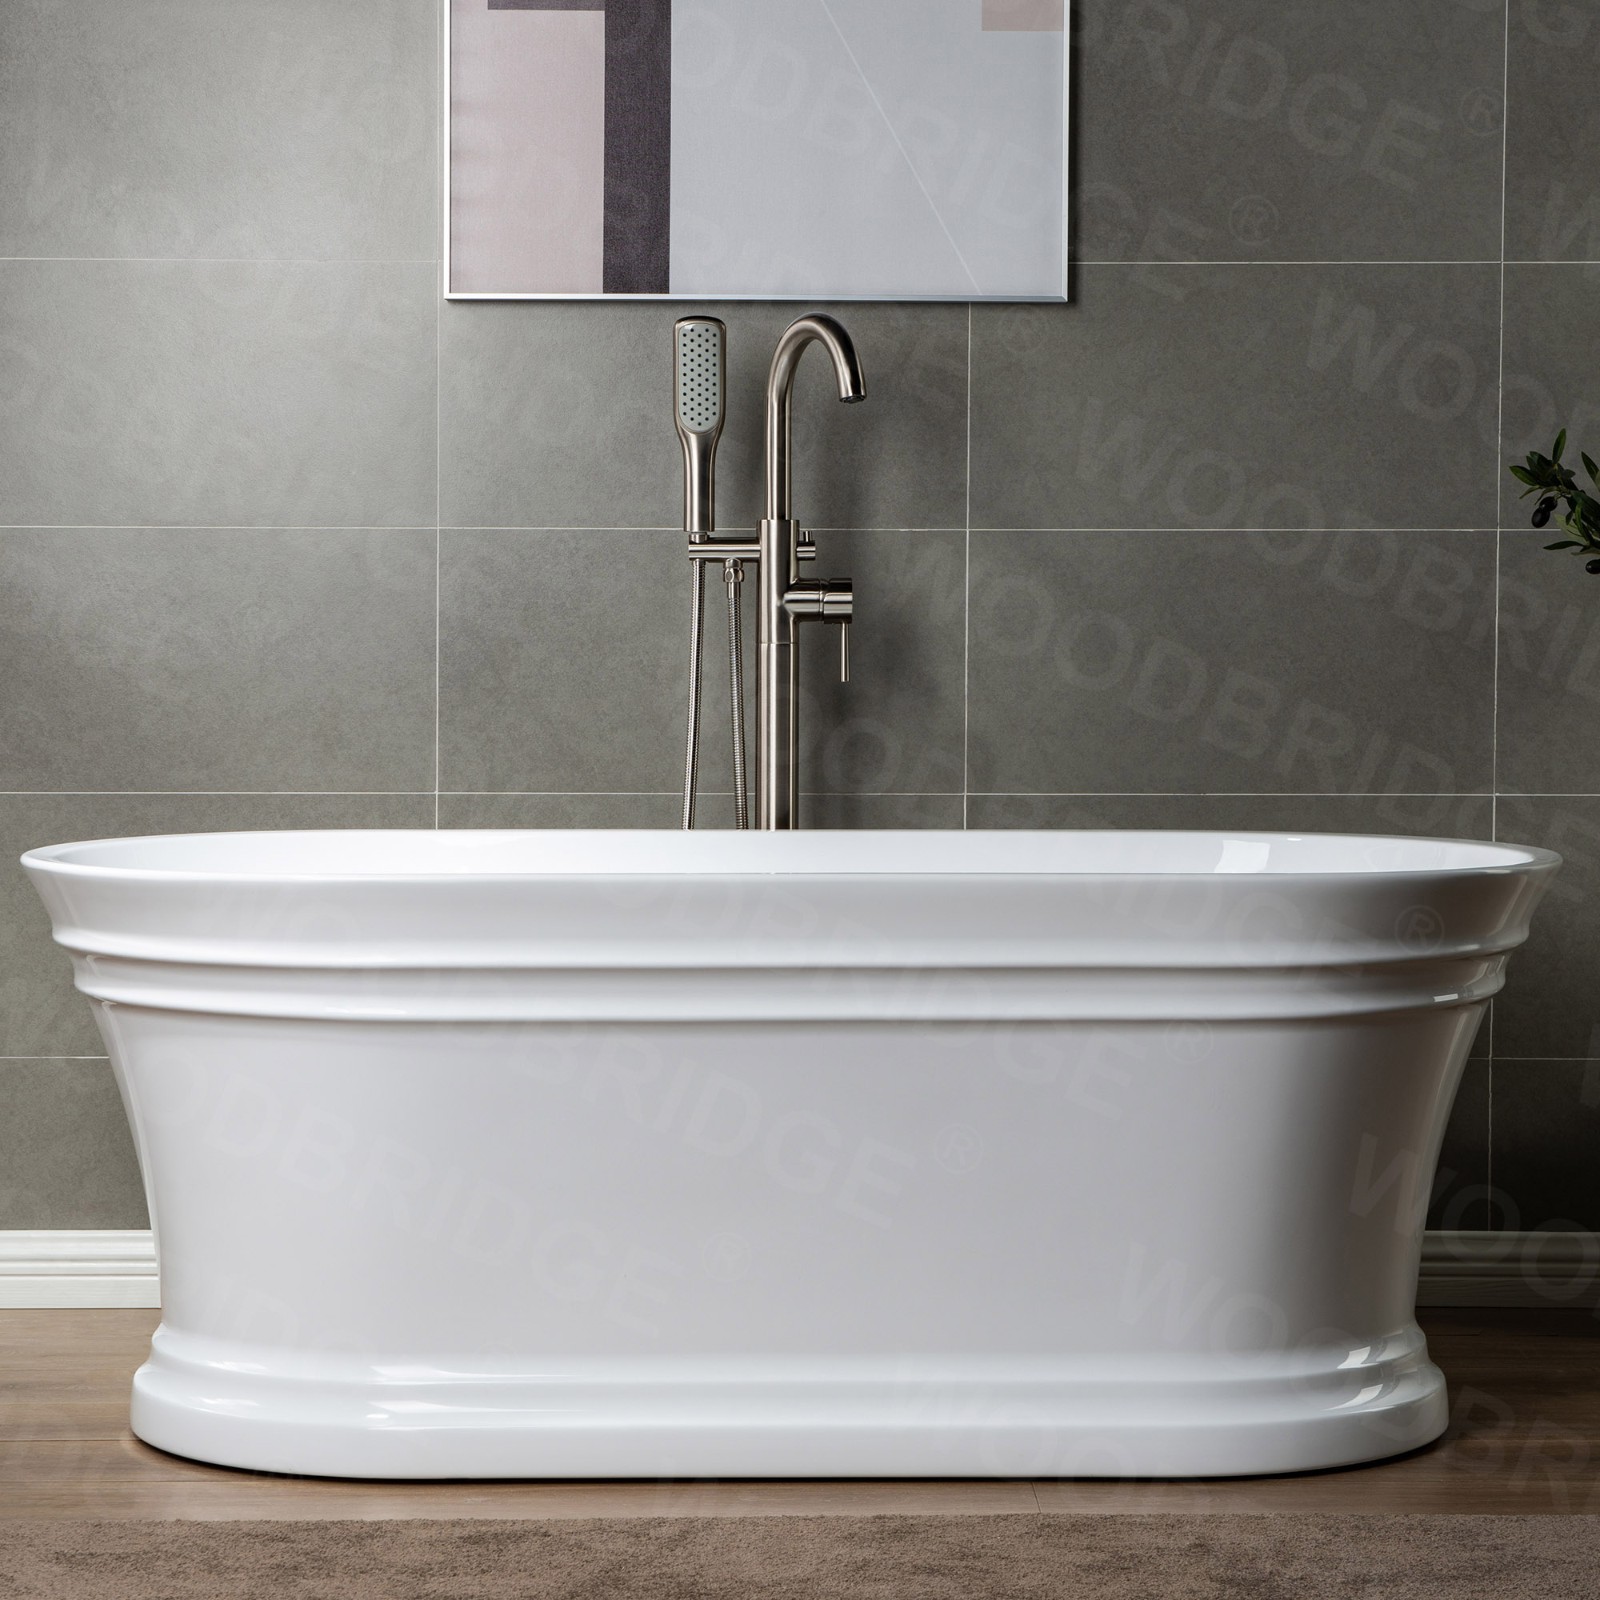  WOODBRIDGE WOODBRIDGEE Contemporary Single Handle Floor Mount Freestanding Tub Filler Faucet with Hand Shower in (Brushed Nickel) Finish,F0001BNSQ_7868